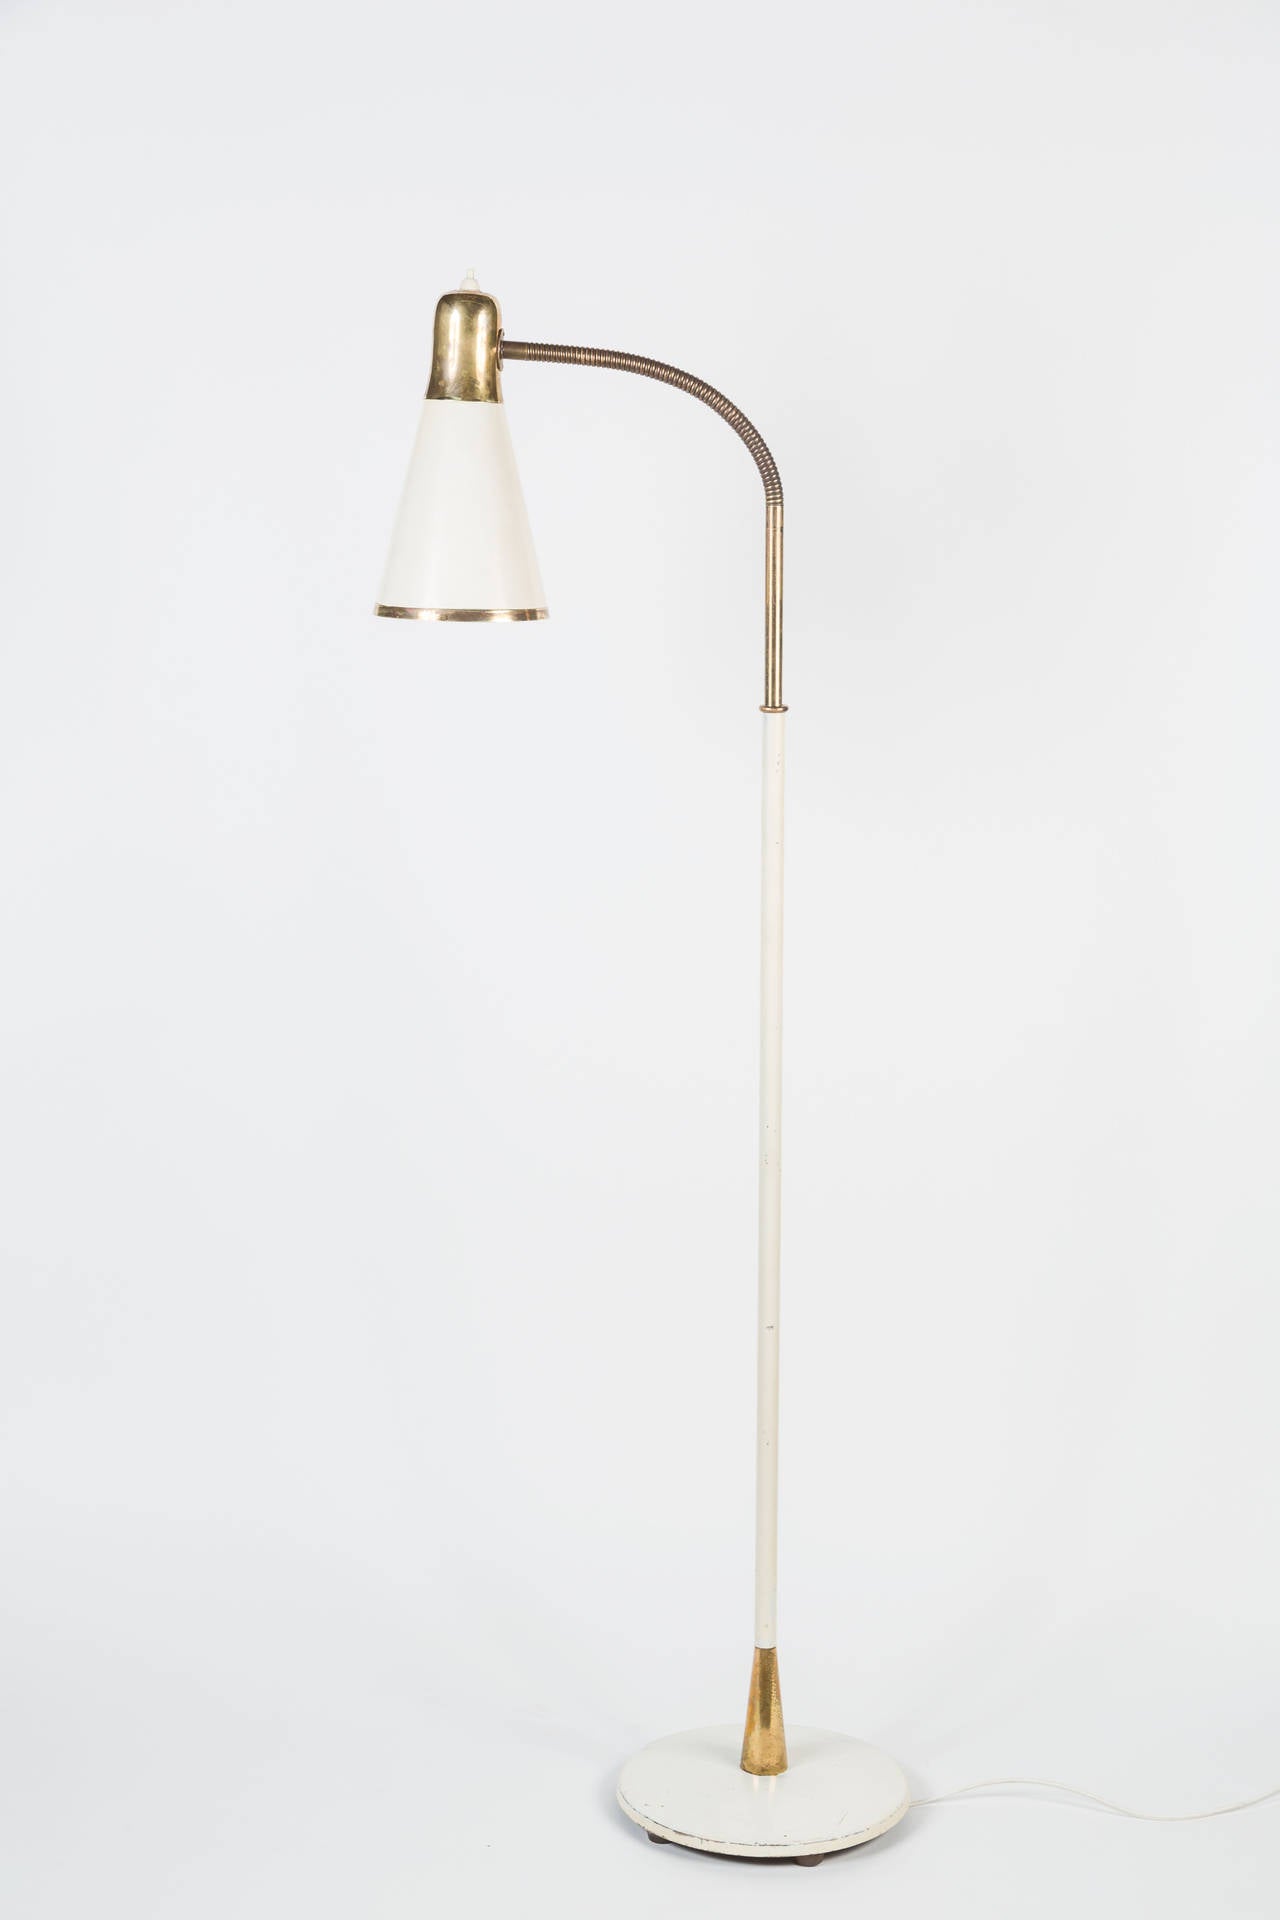 Brass goose neck floor lamp for Sonnico electro.